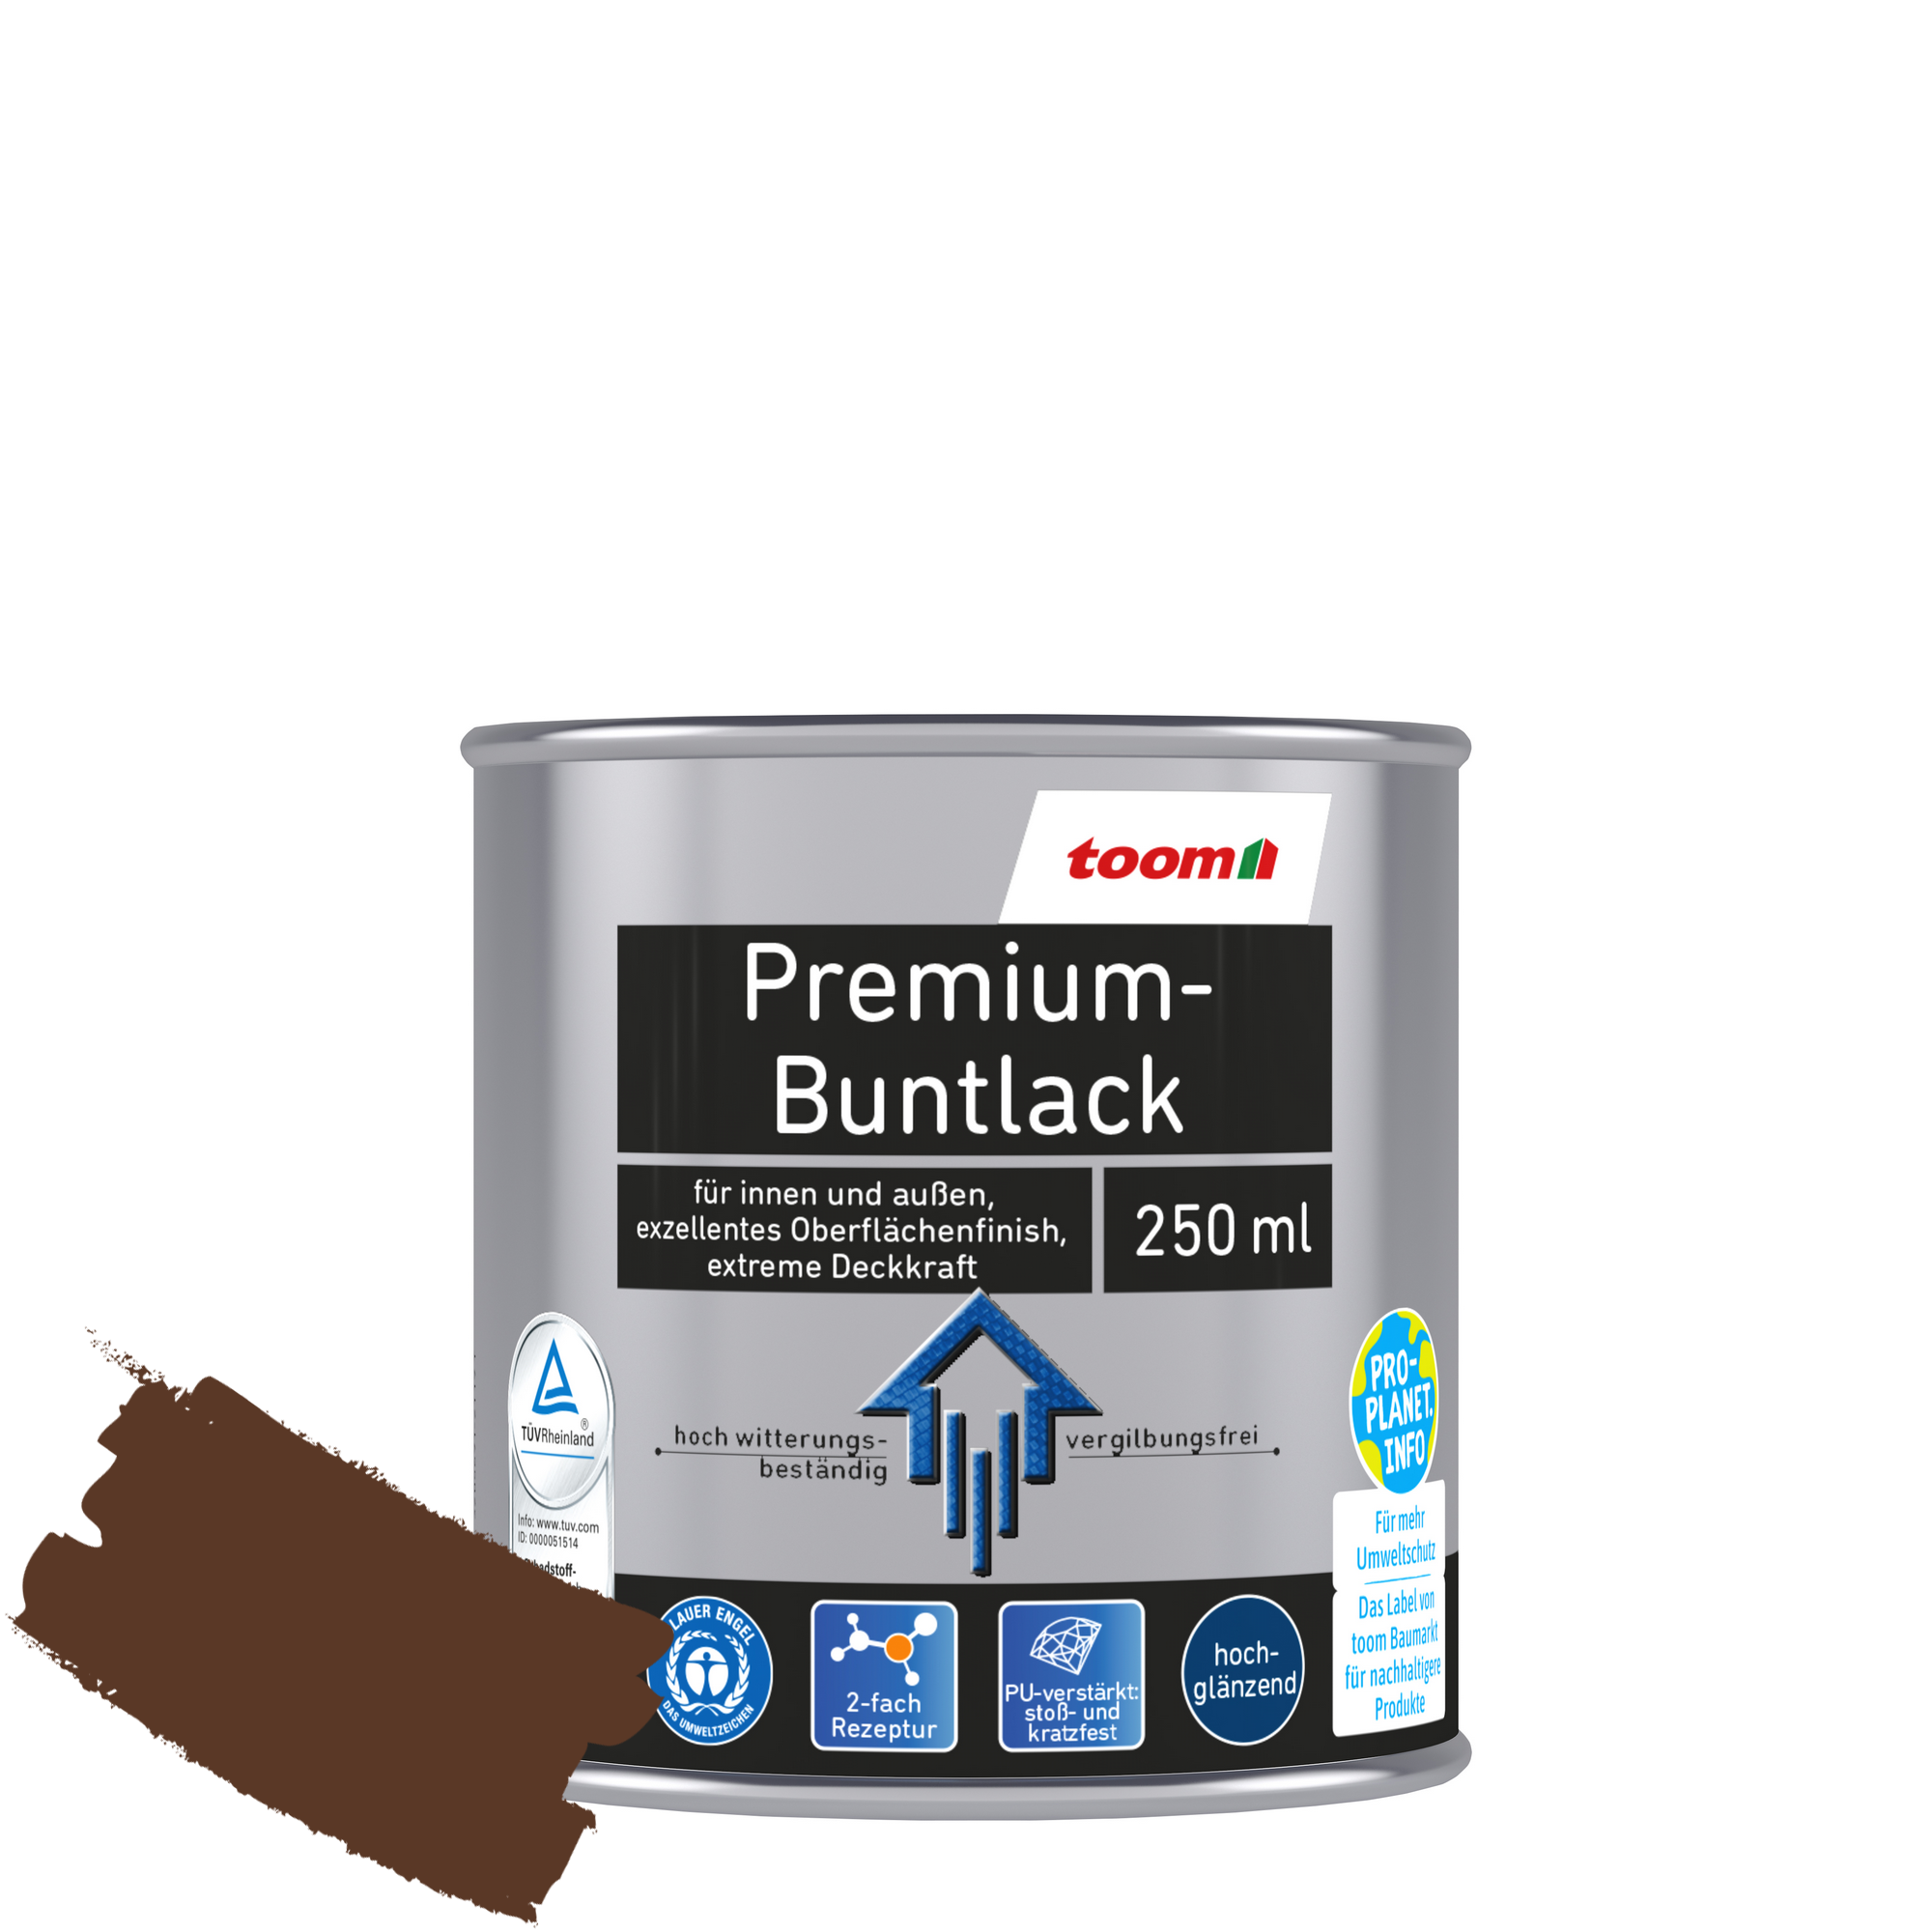 Premium-Buntlack nussbraun glänzend 250 ml + product picture